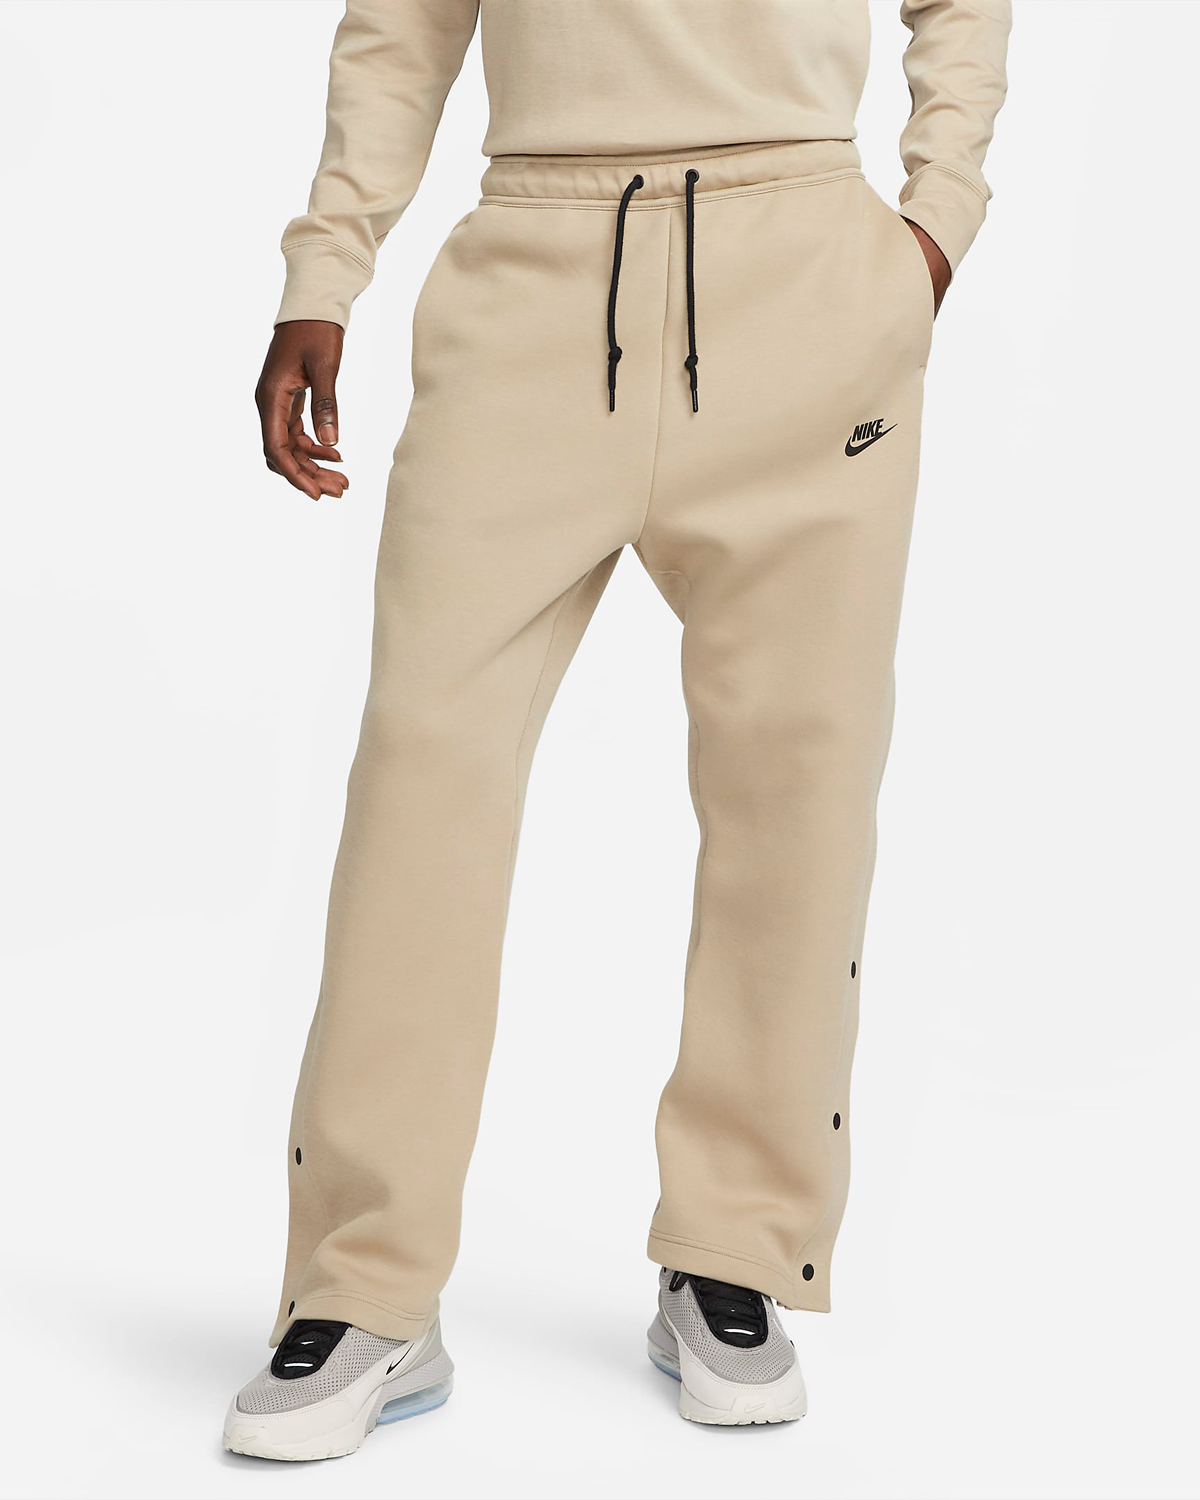 Nike-Tech-Fleece-Tear-Away-Pants-Khaki